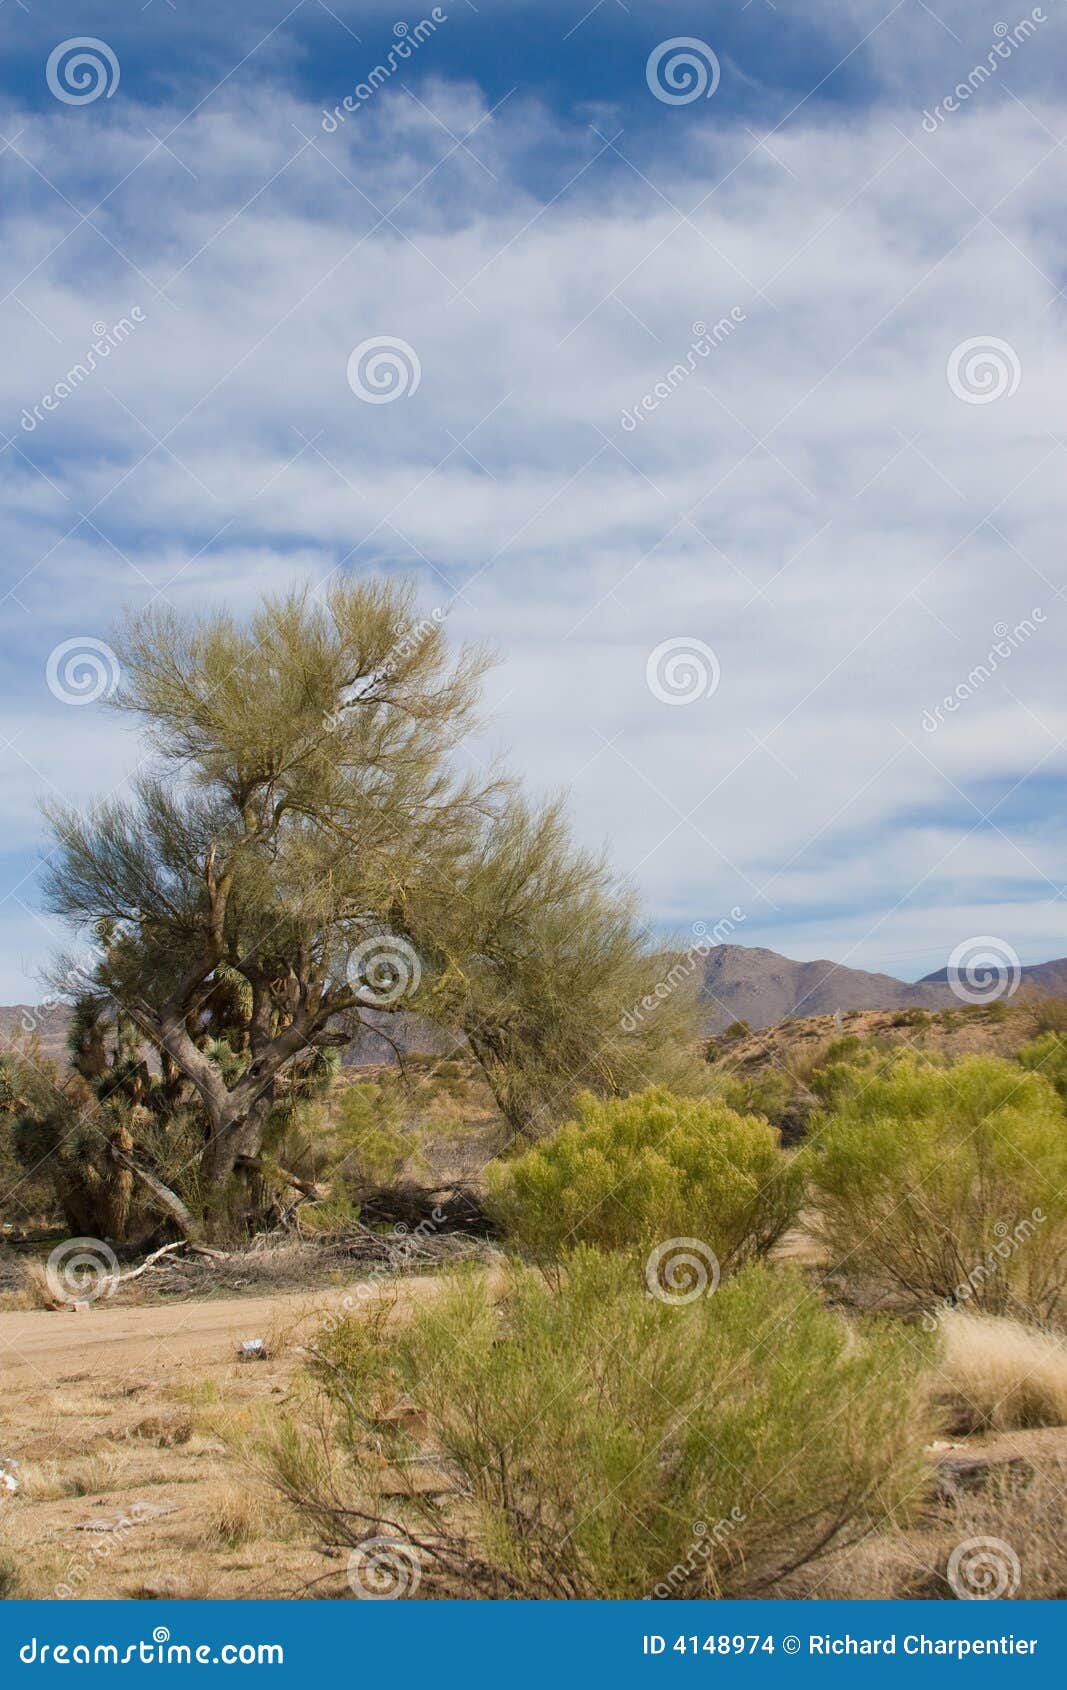 sonoran desert arizona